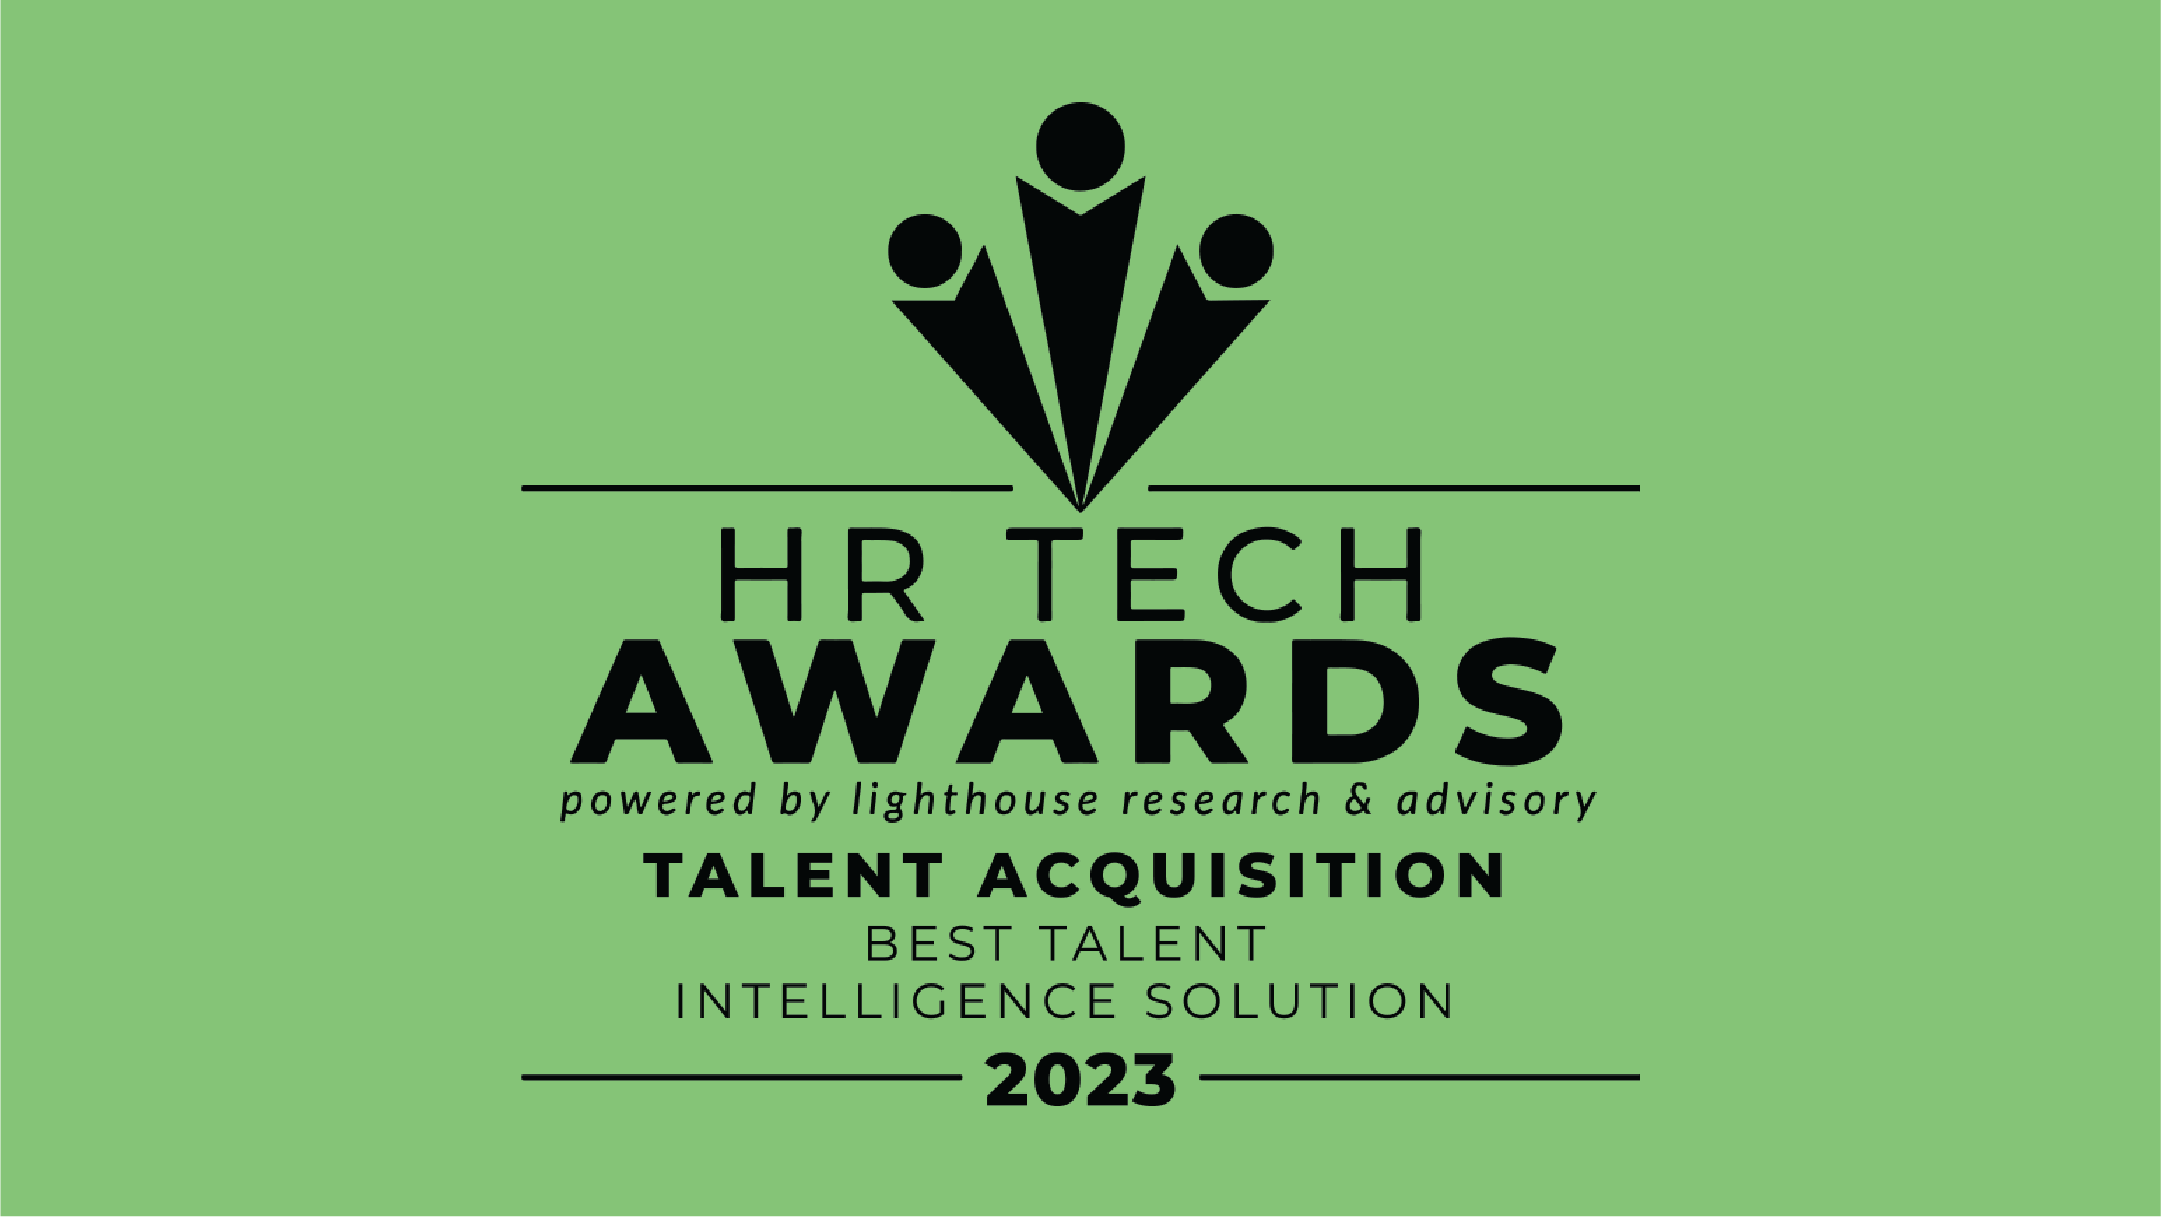 HR Tech Award 2023, Best Talent Intelligence Solution